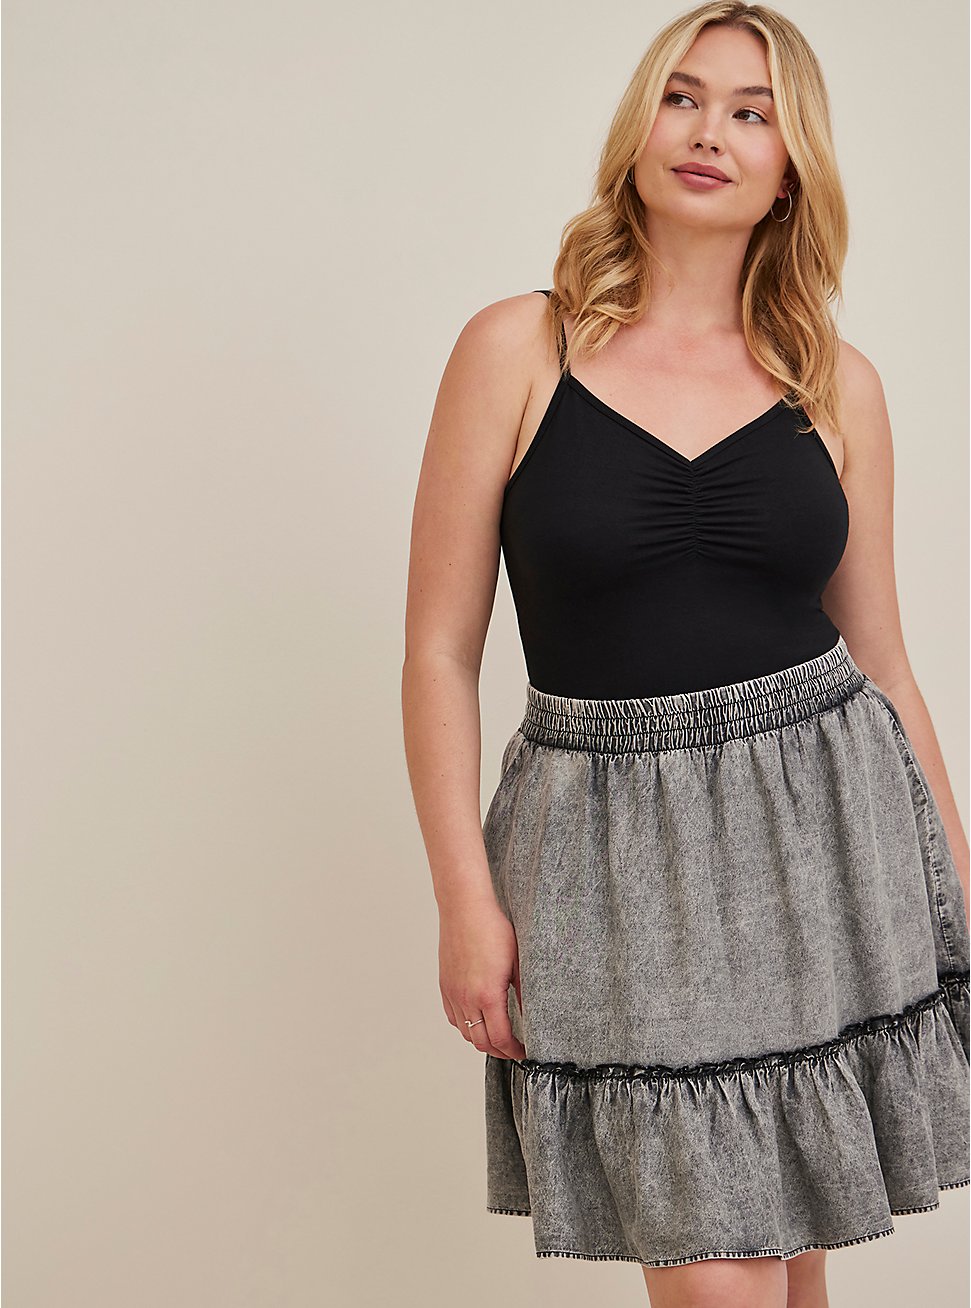 Ruffle Edge Mini Skirt - Chambray Black, DEEP BLACK, hi-res